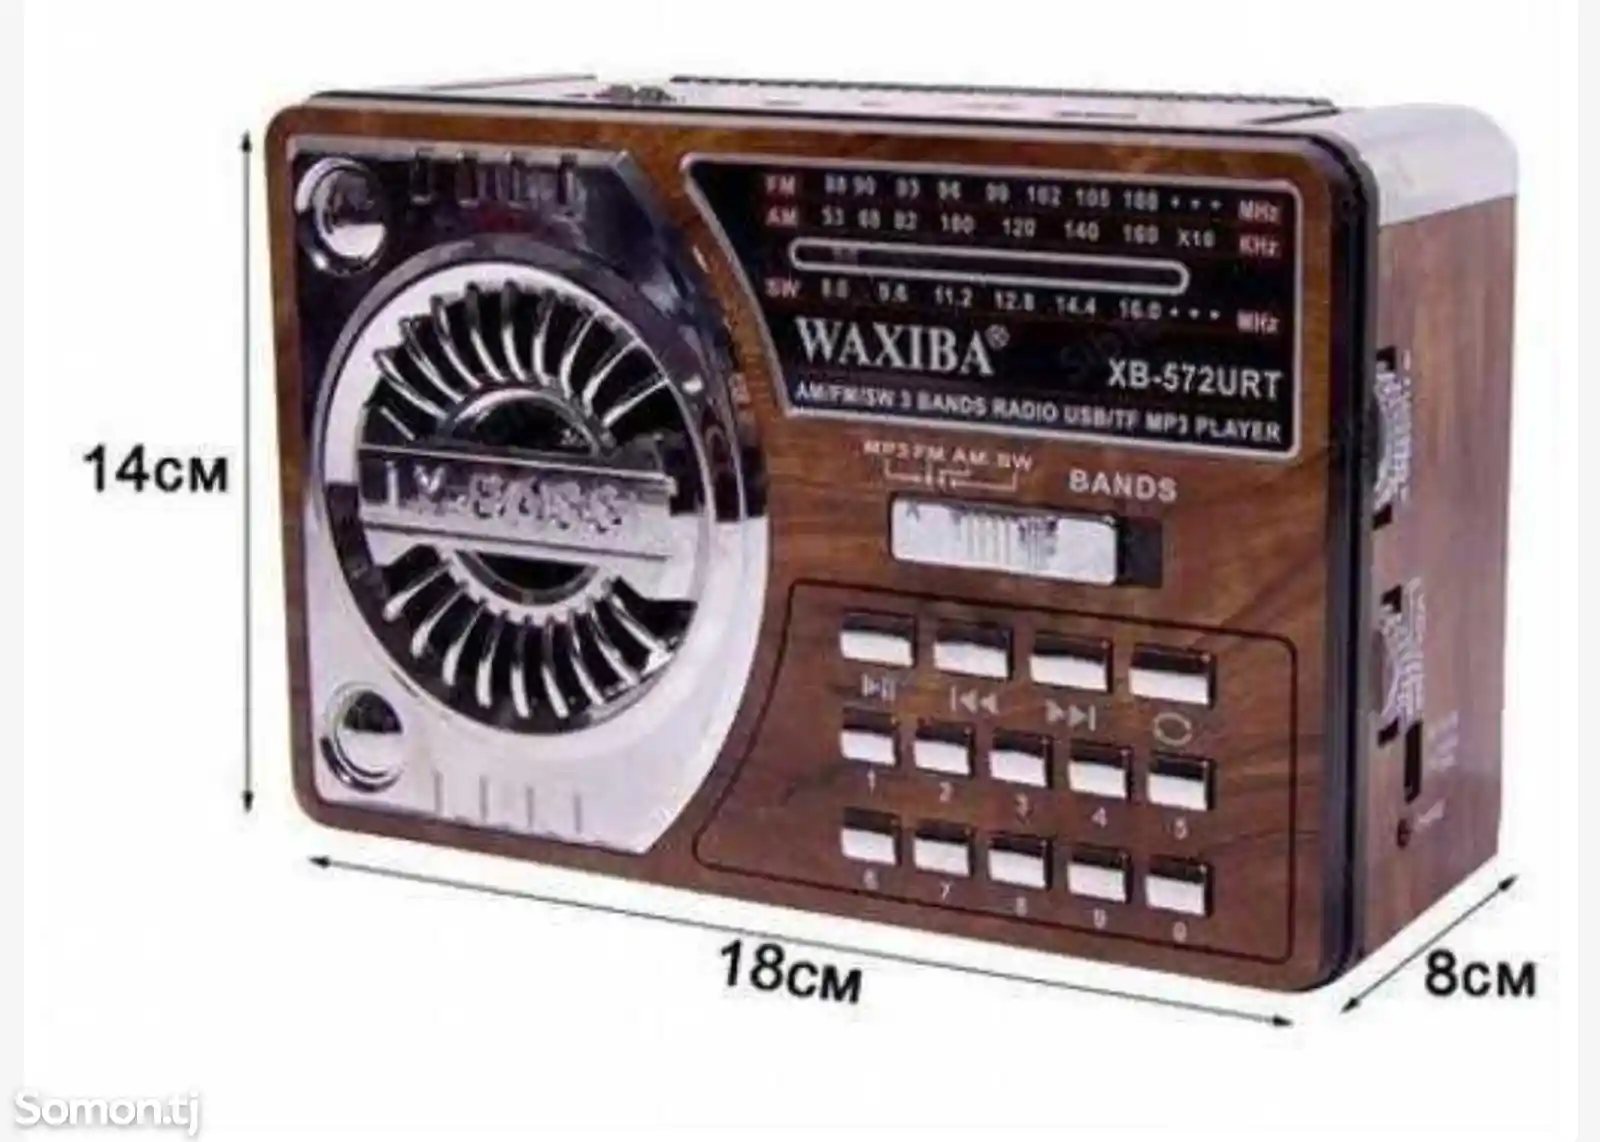 Радиоприёмник WAXIBA 572UR-8